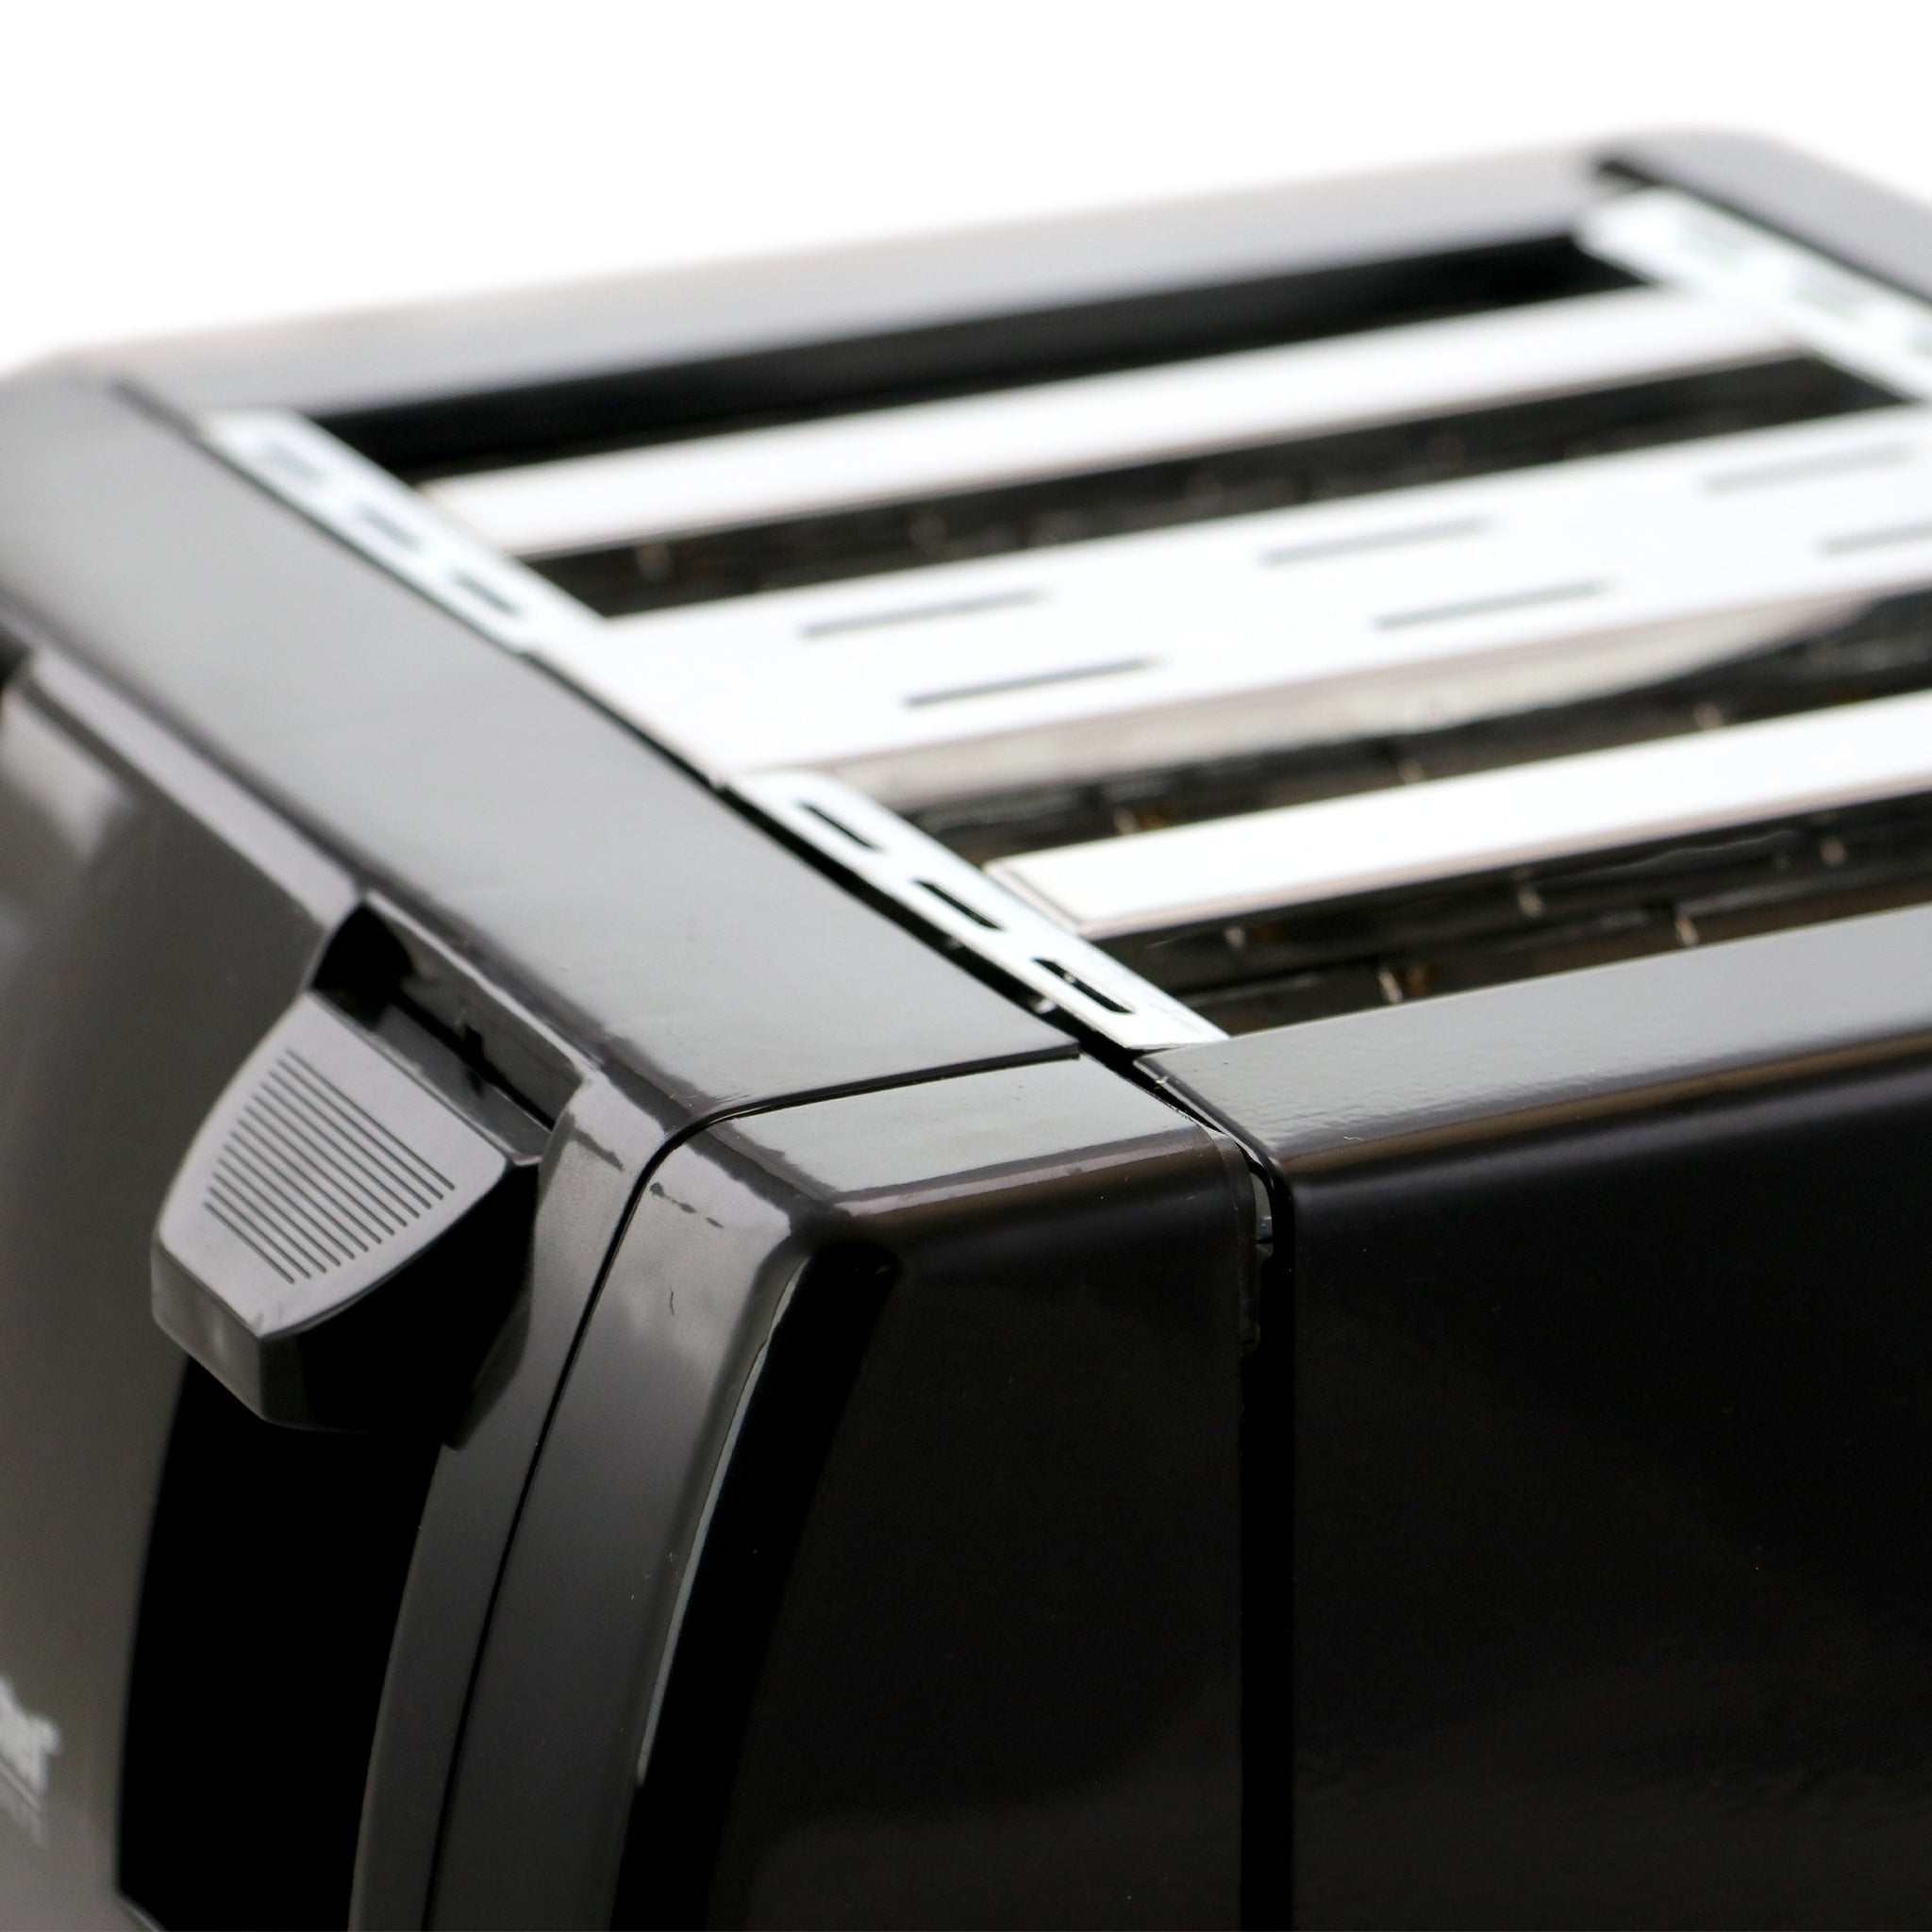 Better Chef 4 Slice Dual-Control Black Toaster IM-242B